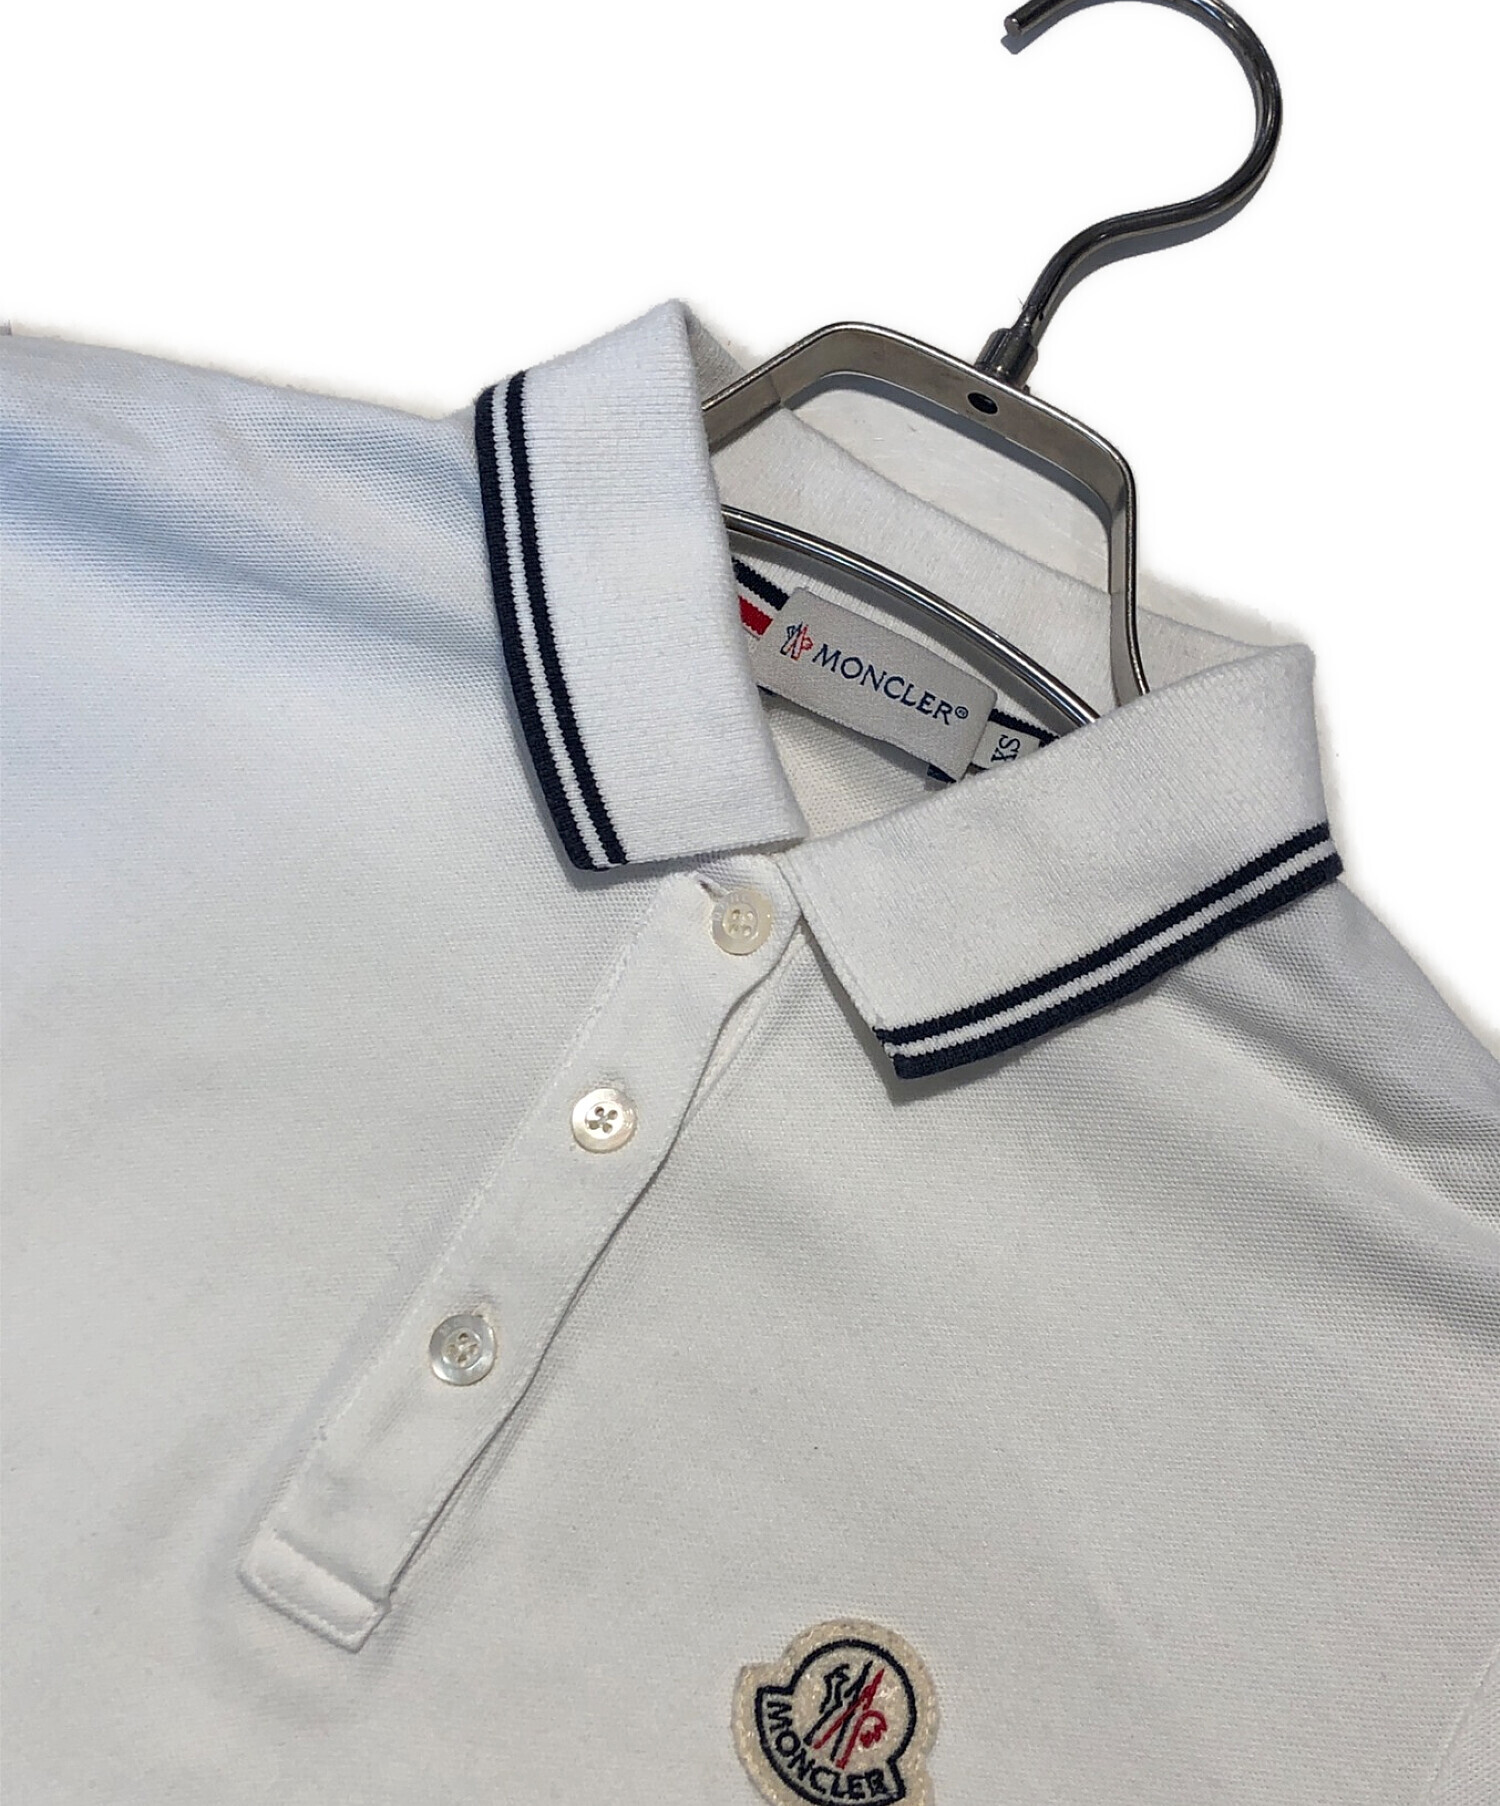 MONCLER (モンクレール) ロゴパッチ鹿の子ポロシャツ ホワイト サイズ:XS